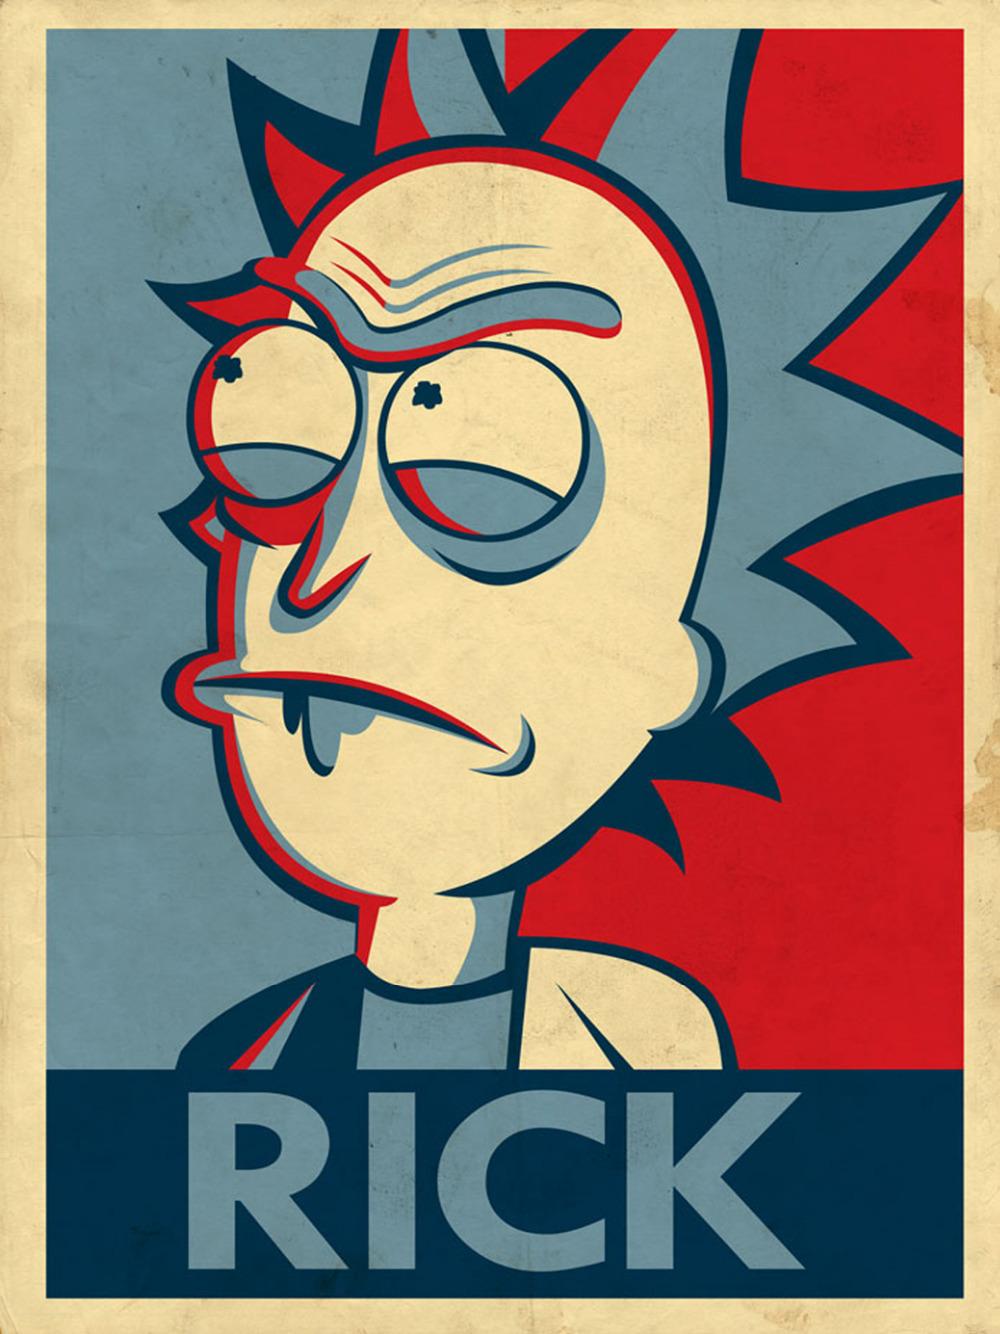 Wallpapers for Rick Morty Animated APK برای دانلود اندروید